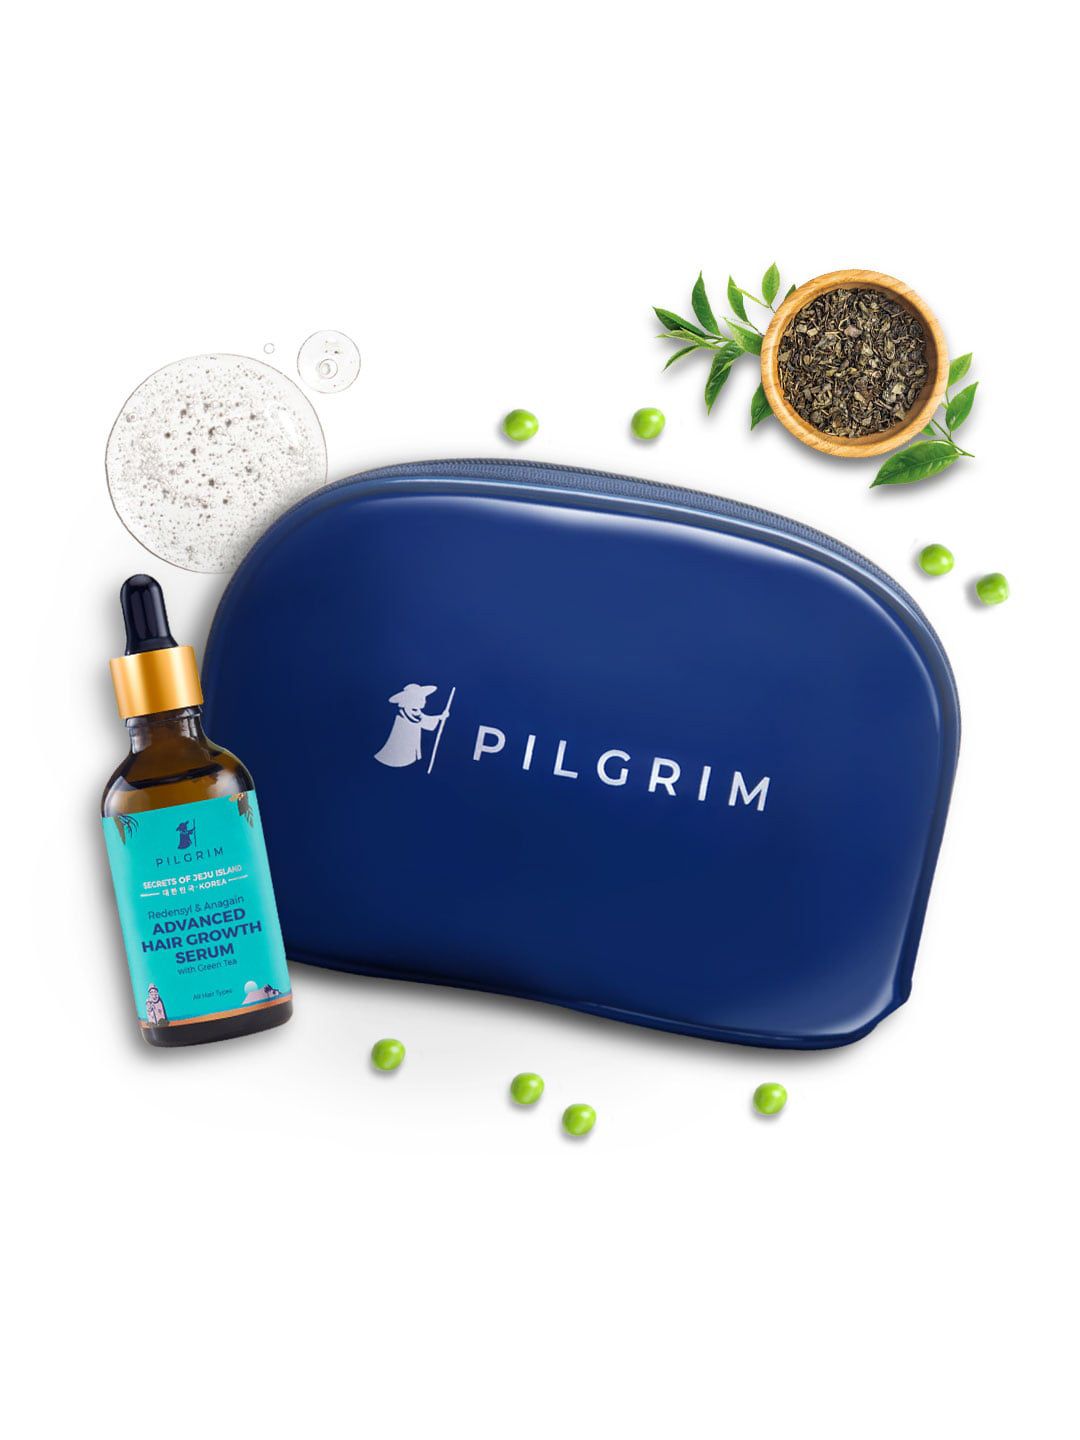 Pilgrim 3% Redensyl + 4% Anagain Advanced Hair Growth Serum with Vanity Bag - 50ml Price in India